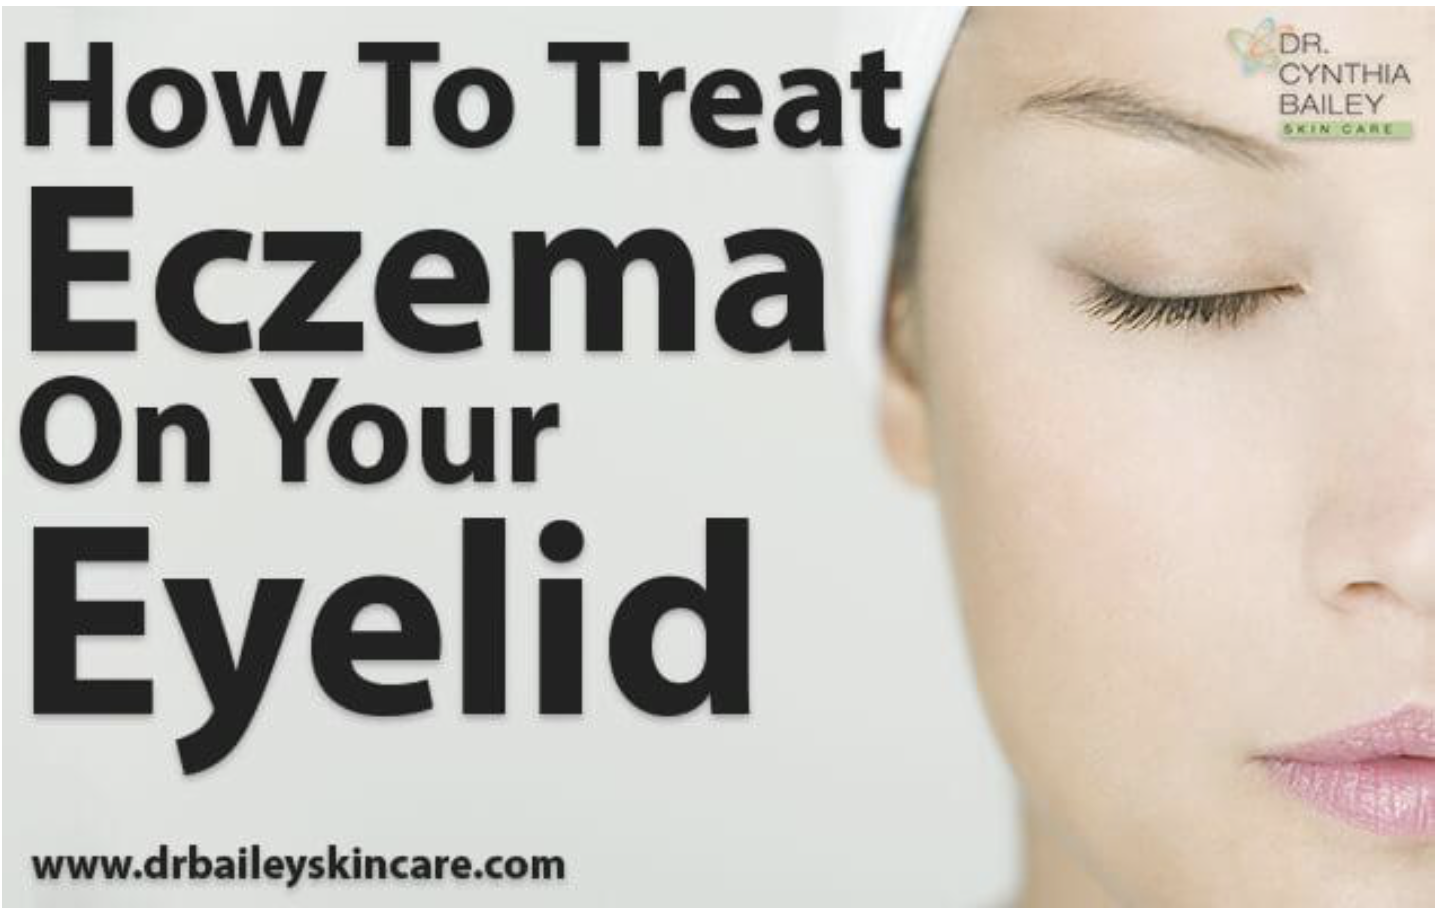 How To Treat Eczema on Your Eyelid